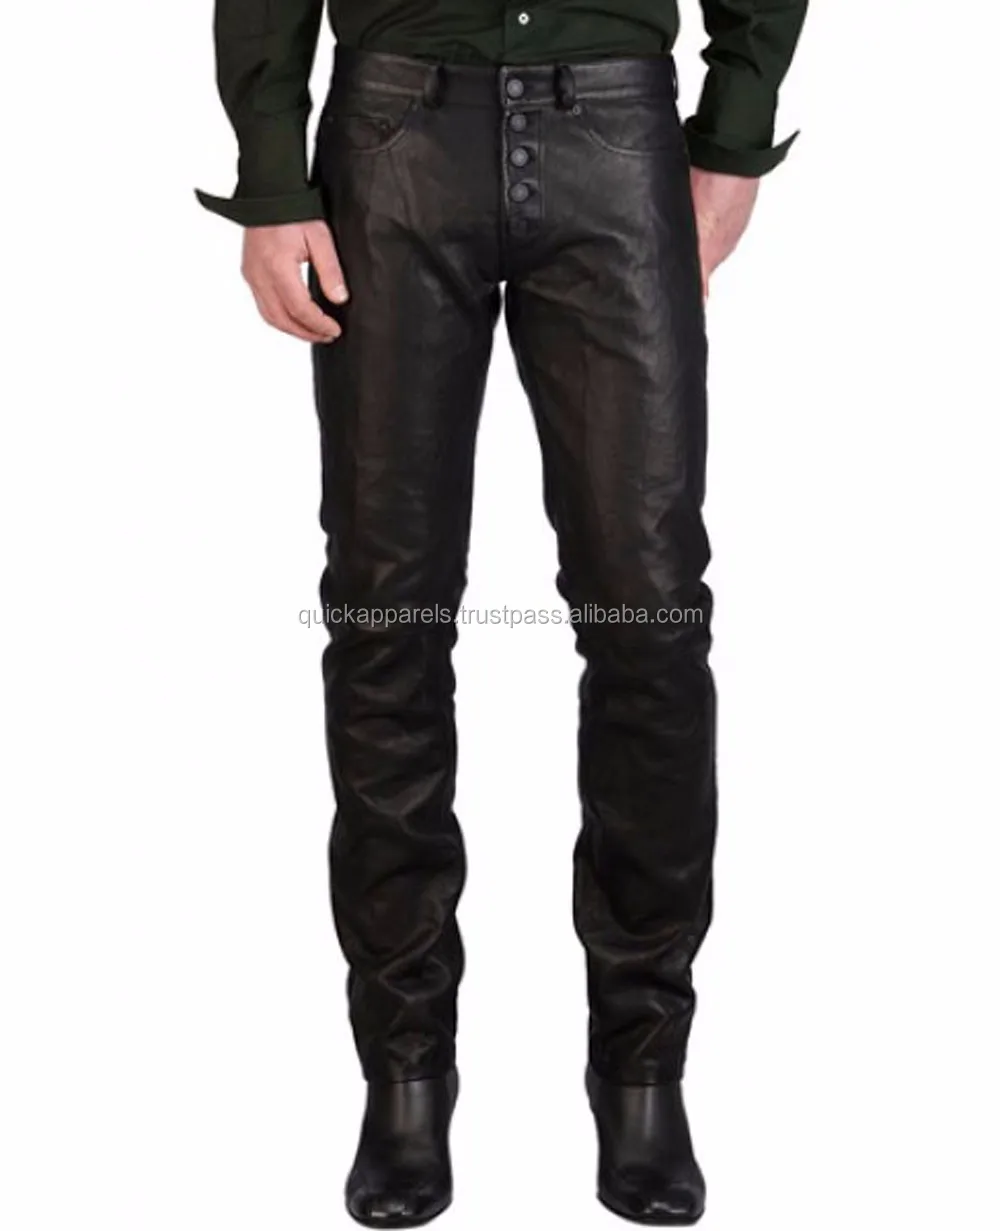 Teal Vegan Leather Biker Jacket  Womens Pants  Motto Fashions